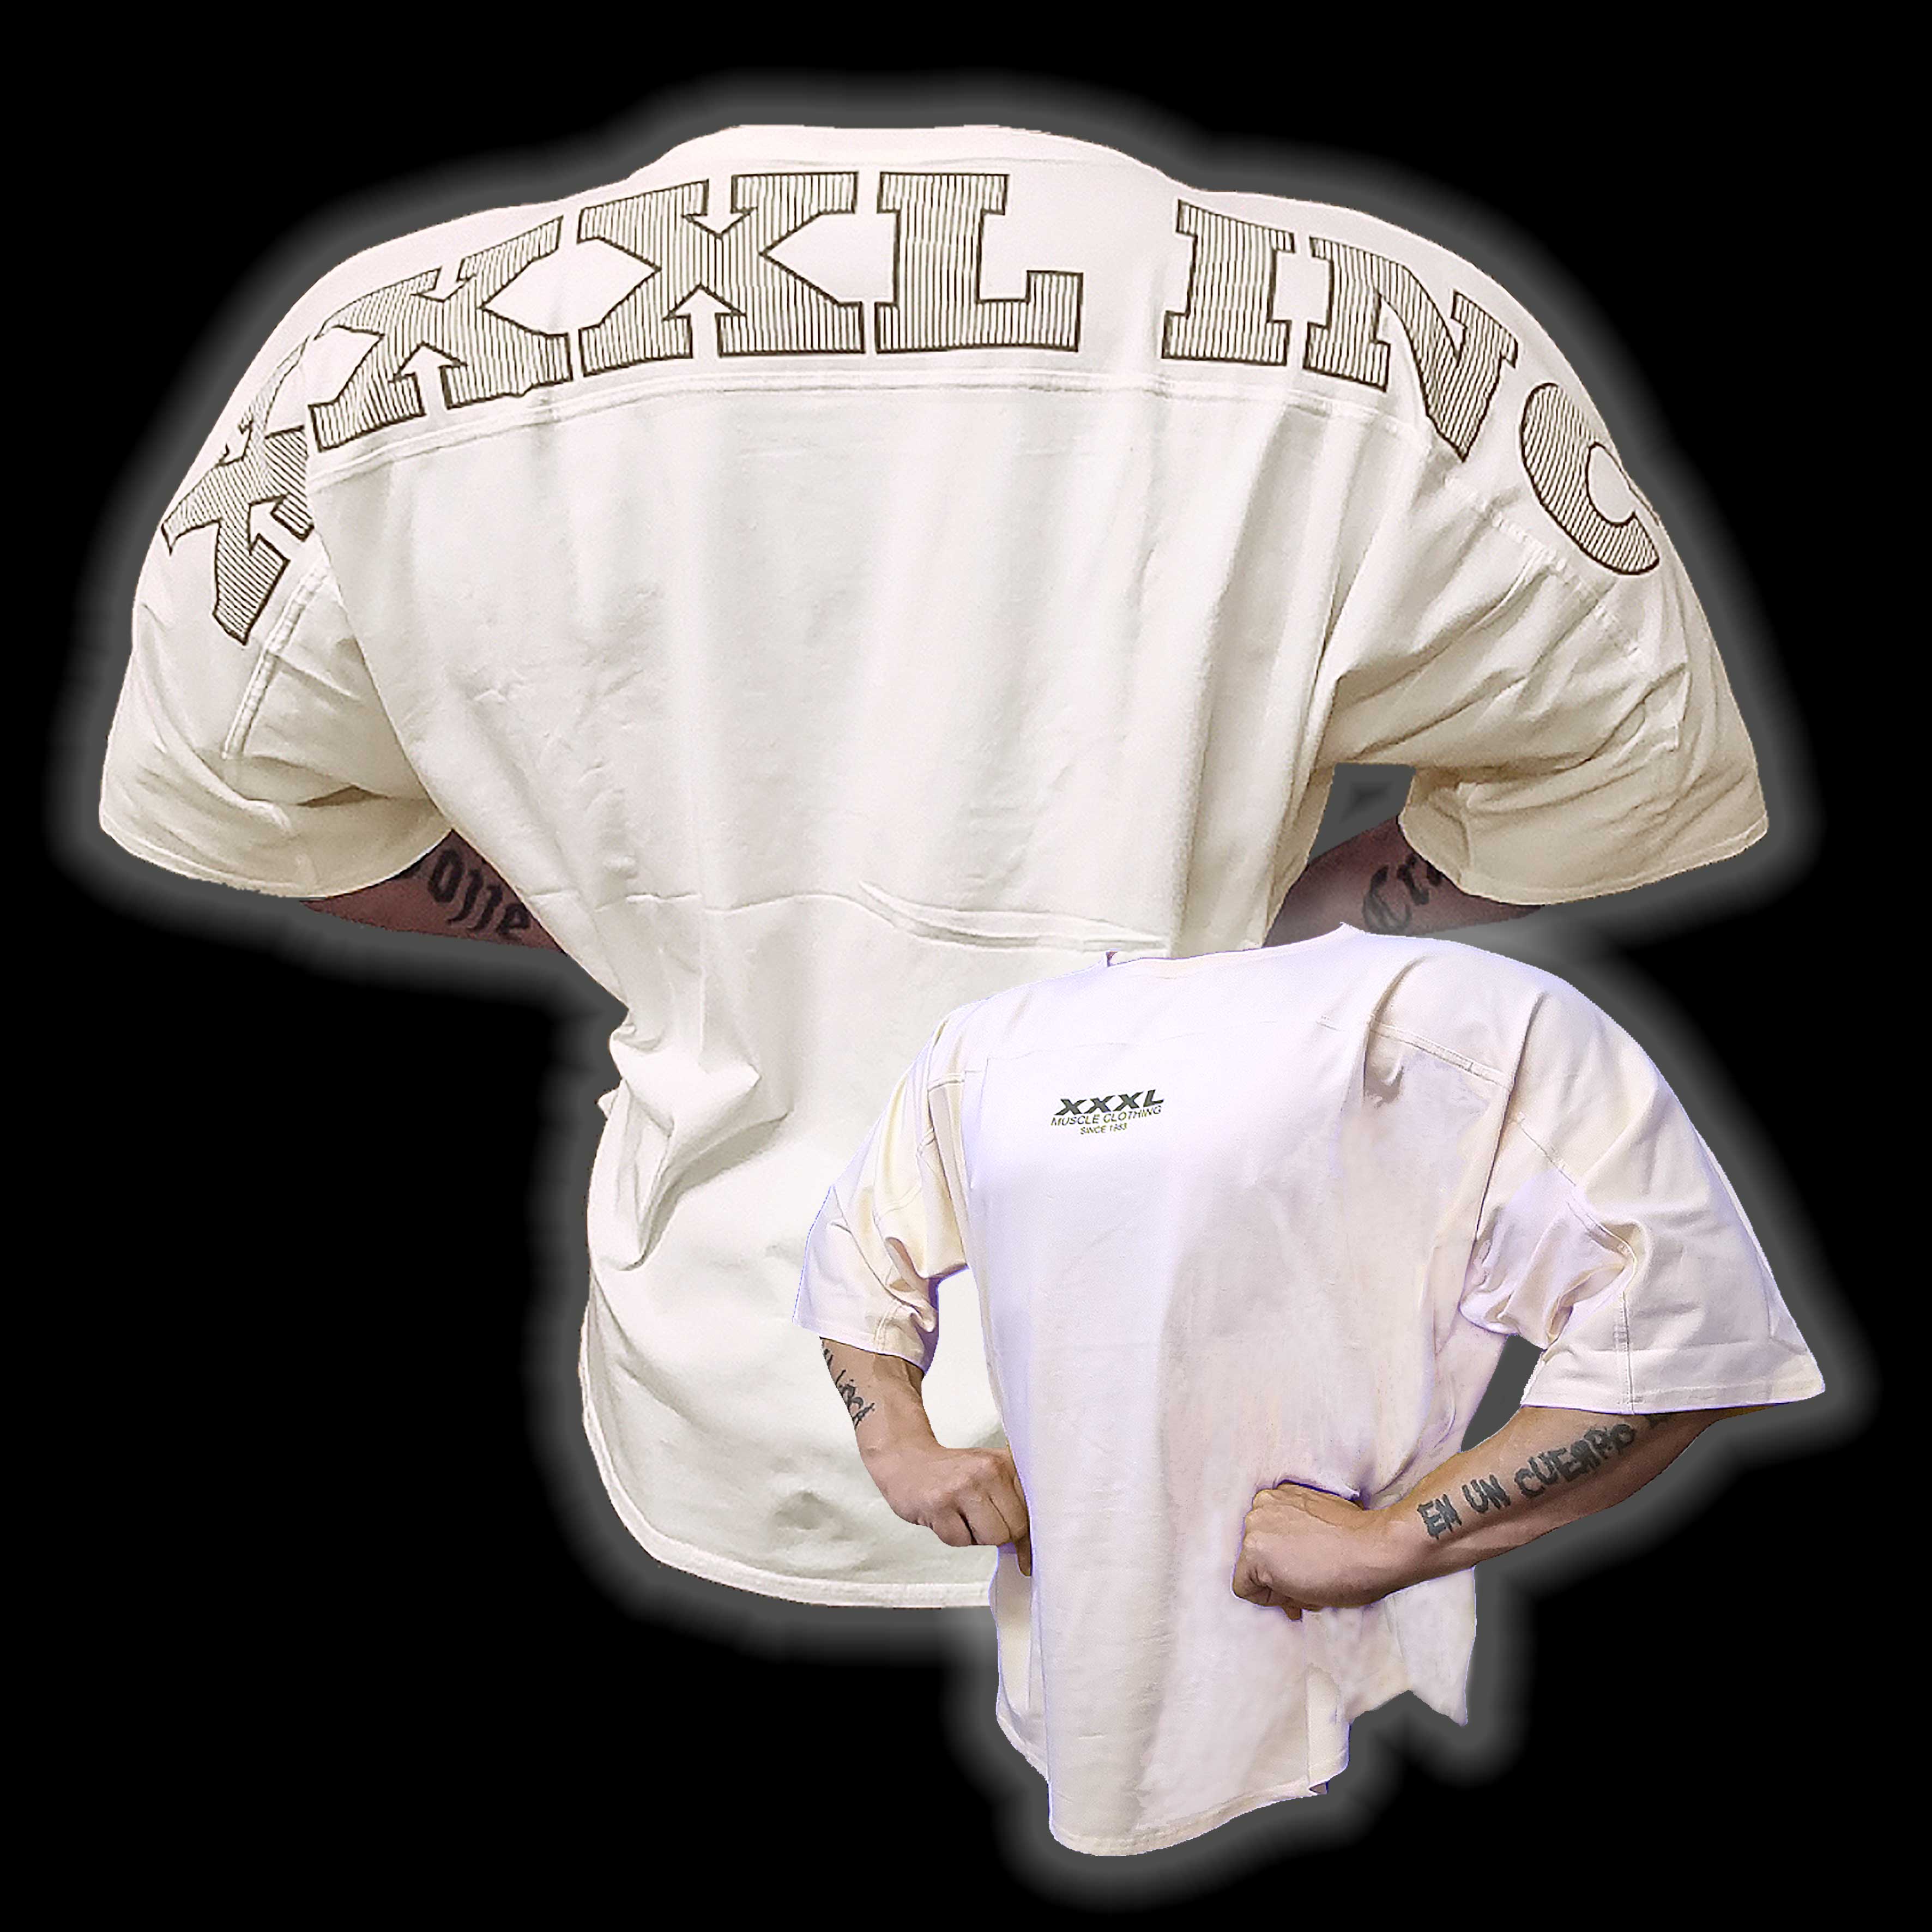 " XXXL Inc" Signature Rag Top - Vintage White